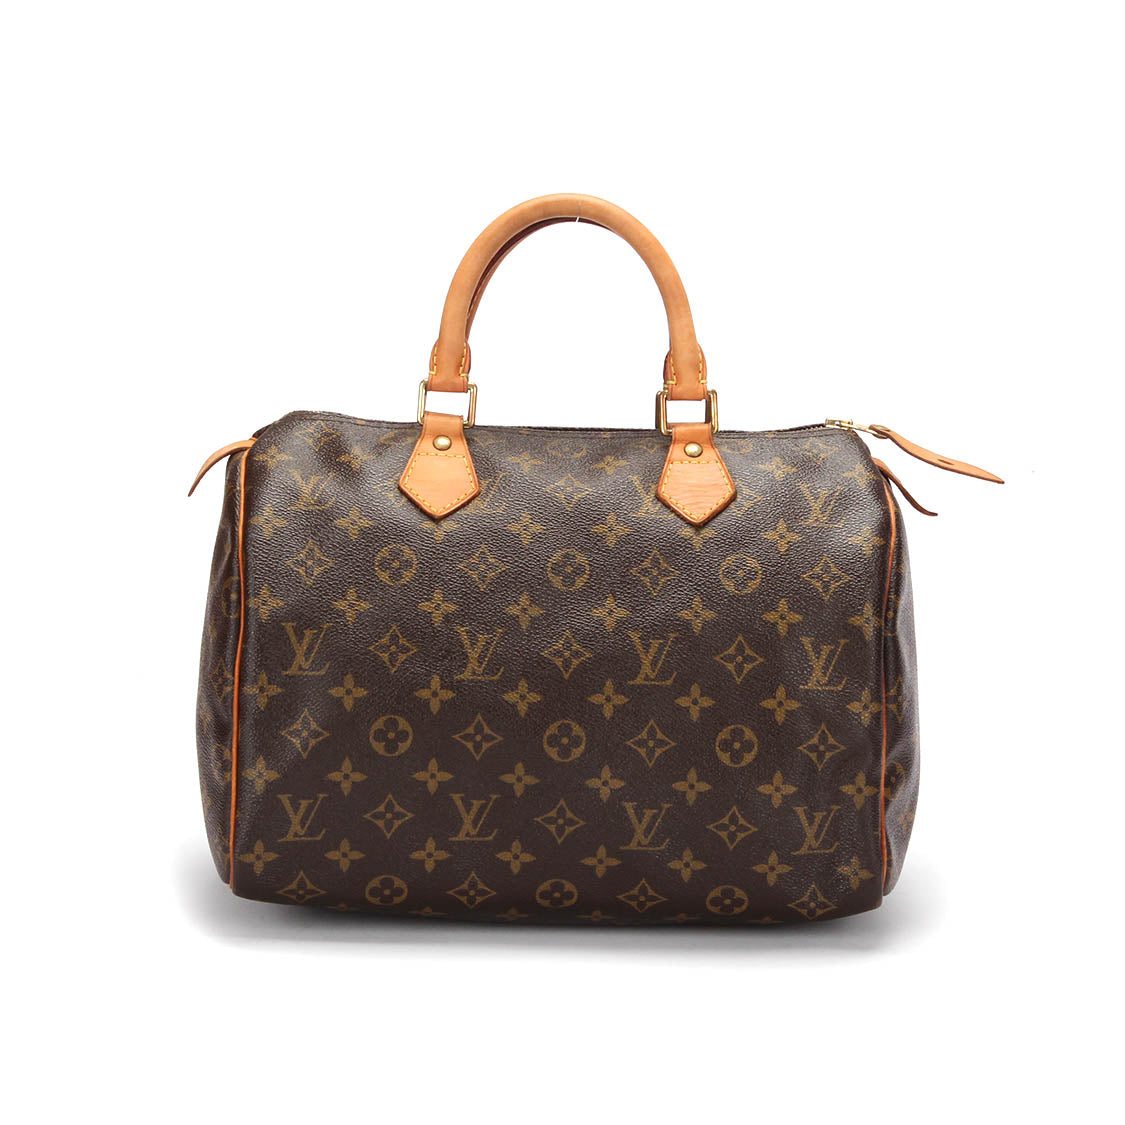 Louis Vuitton Monogram Canvas Speedy 30 Canvas Handbag M41526 in Good condition